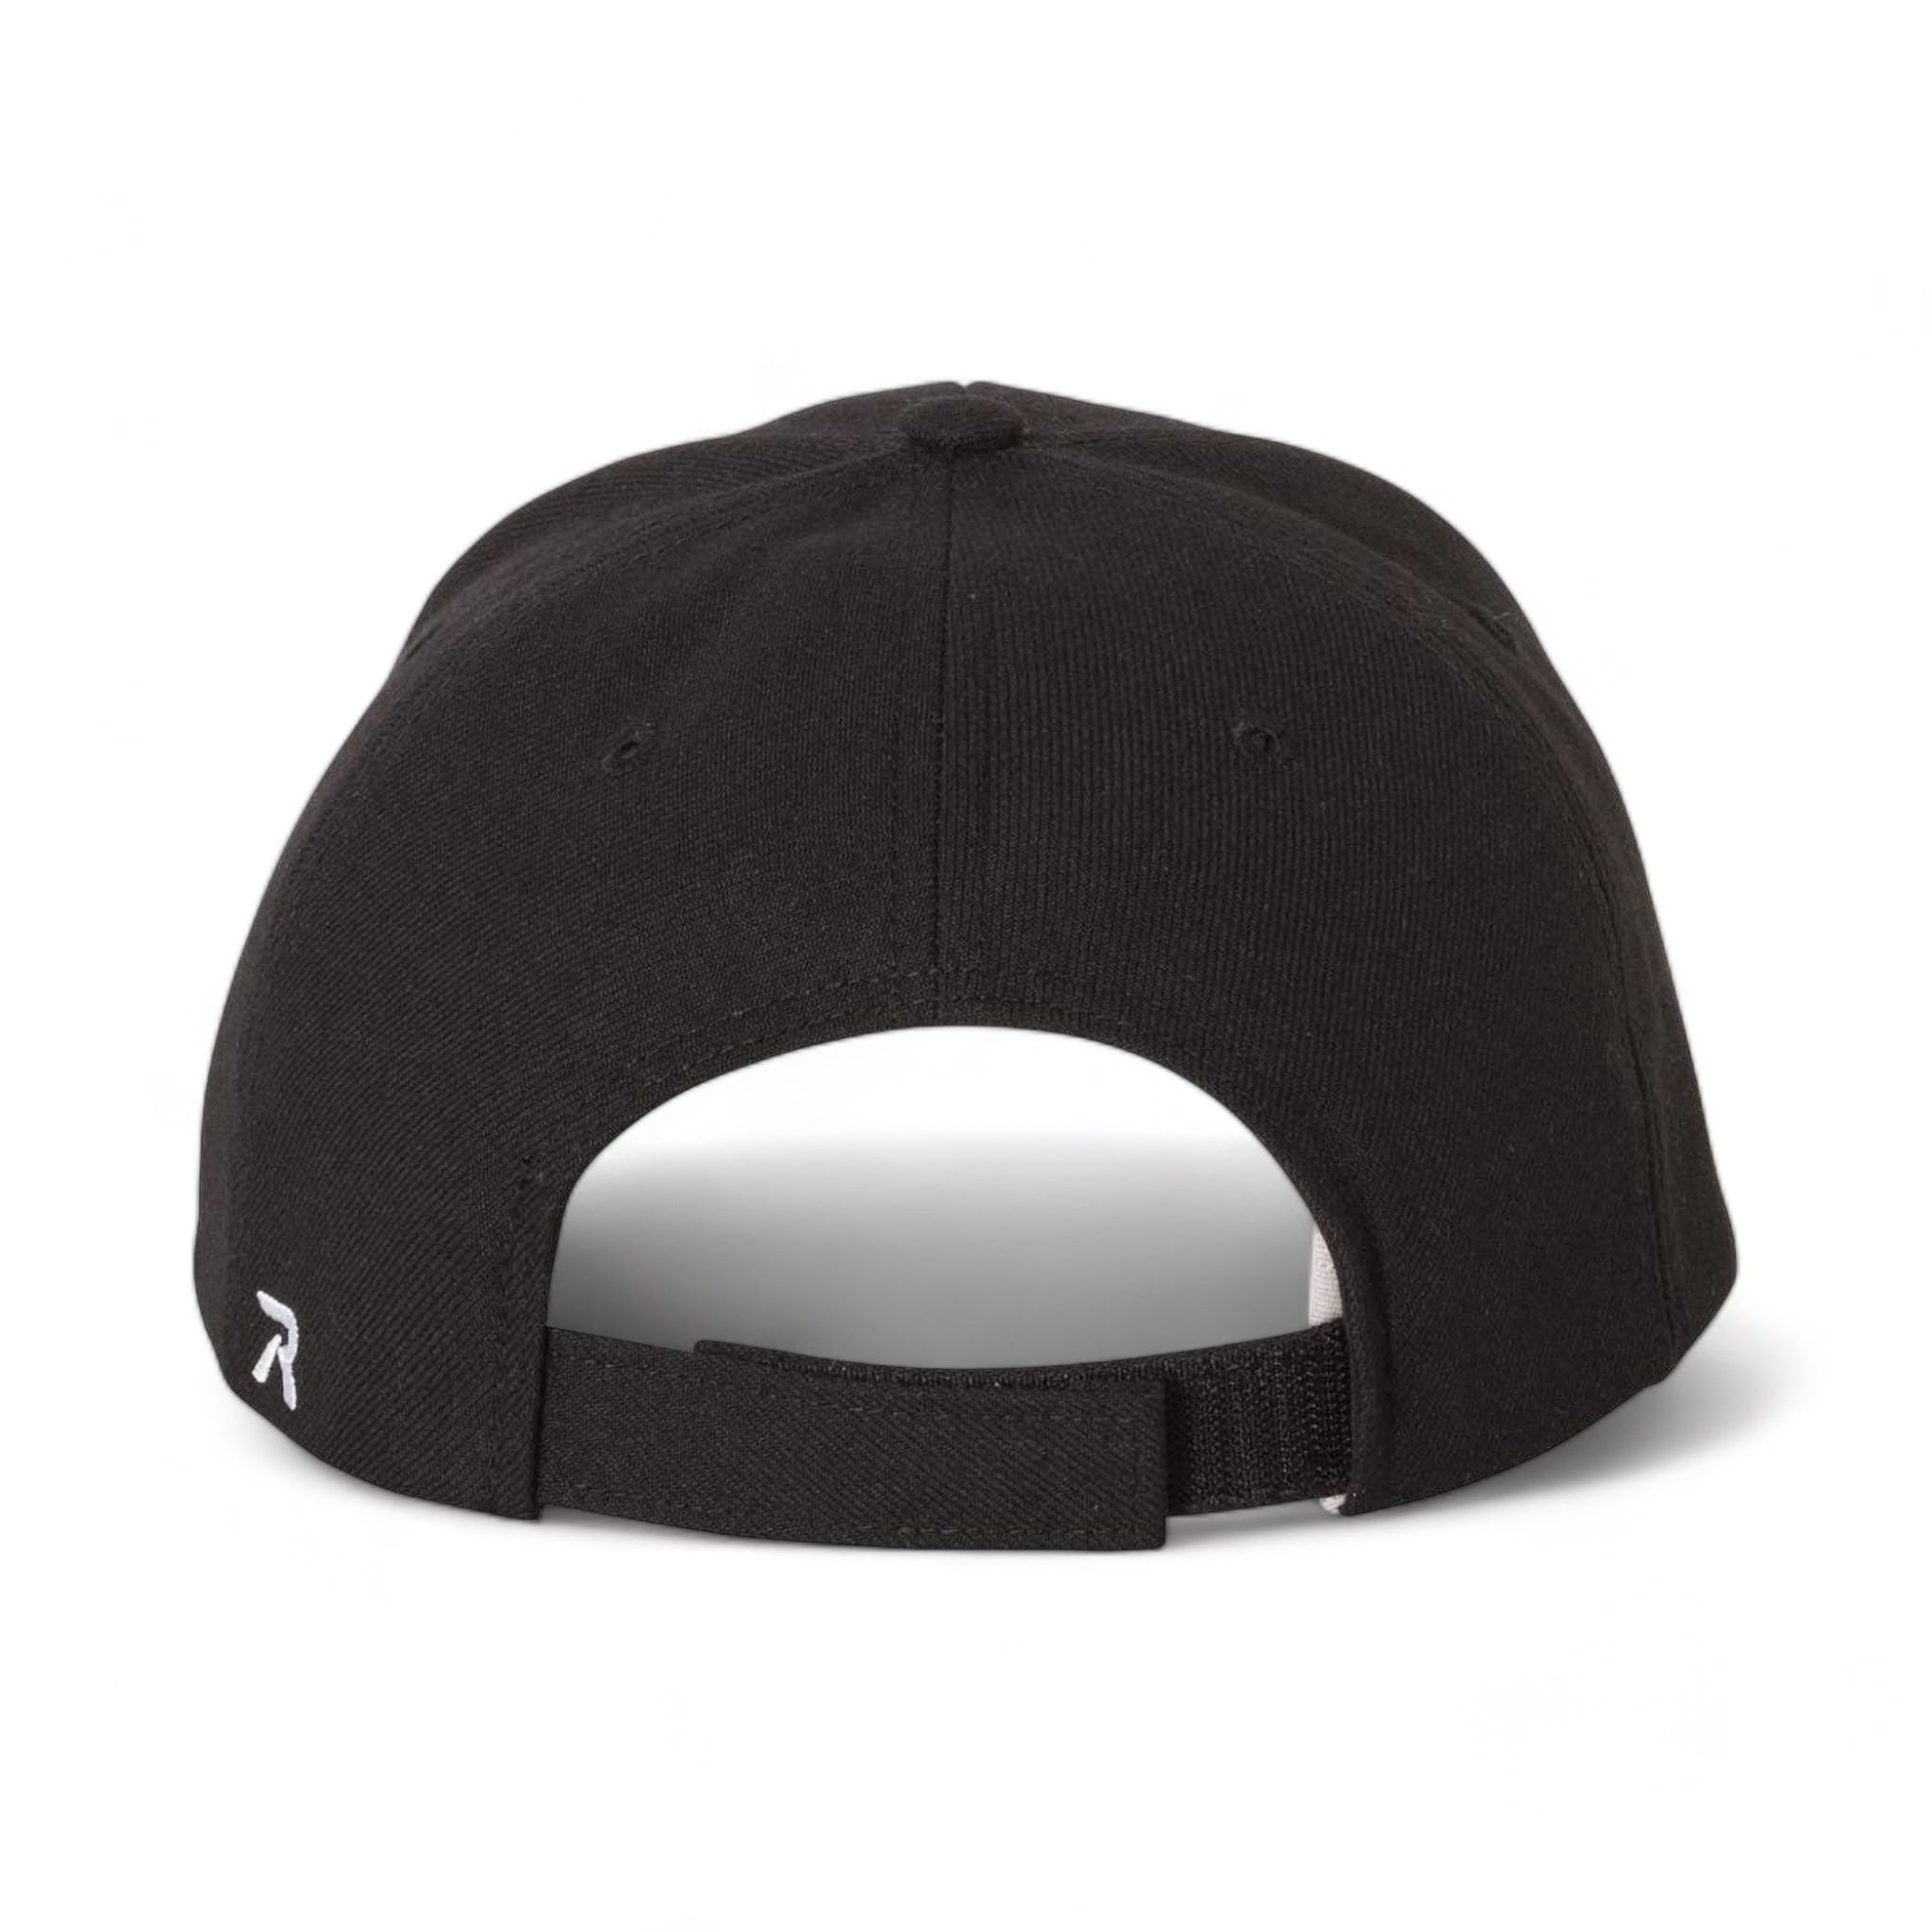 Back view of Richardson 514 custom hat in black